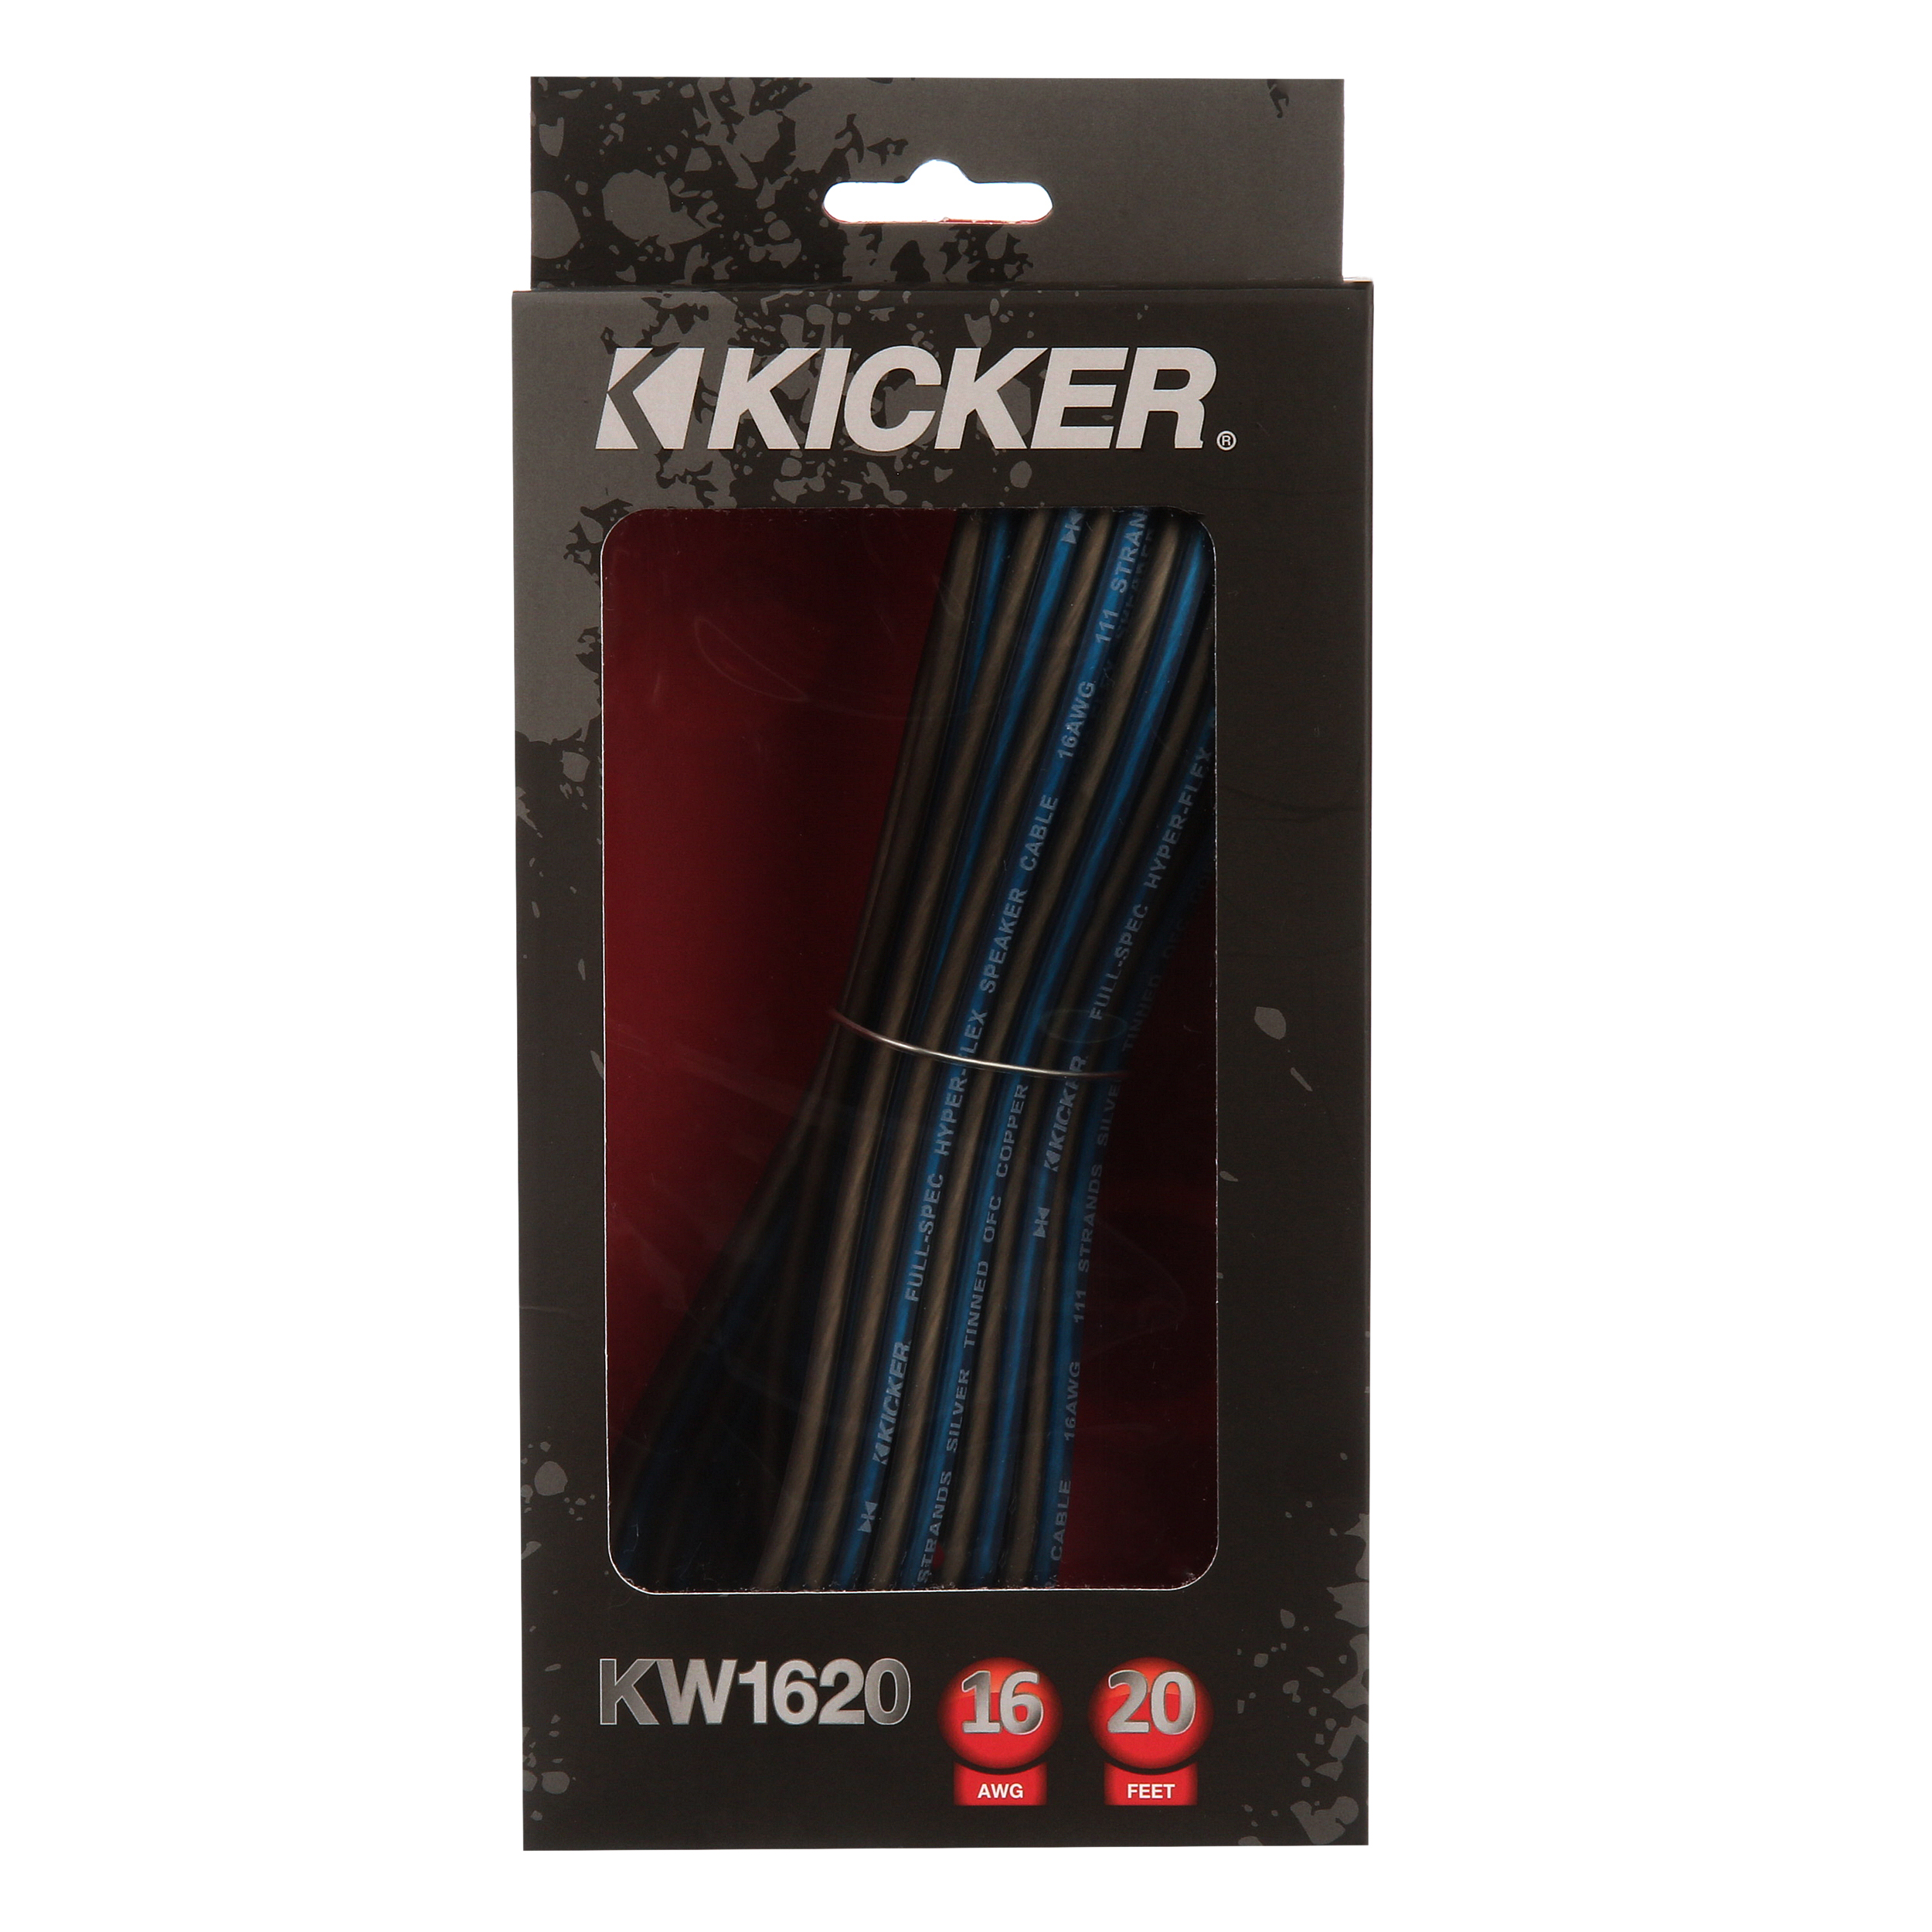 Kicker KW1620 16 AWG Speaker Wire 20ft - image 2 of 5